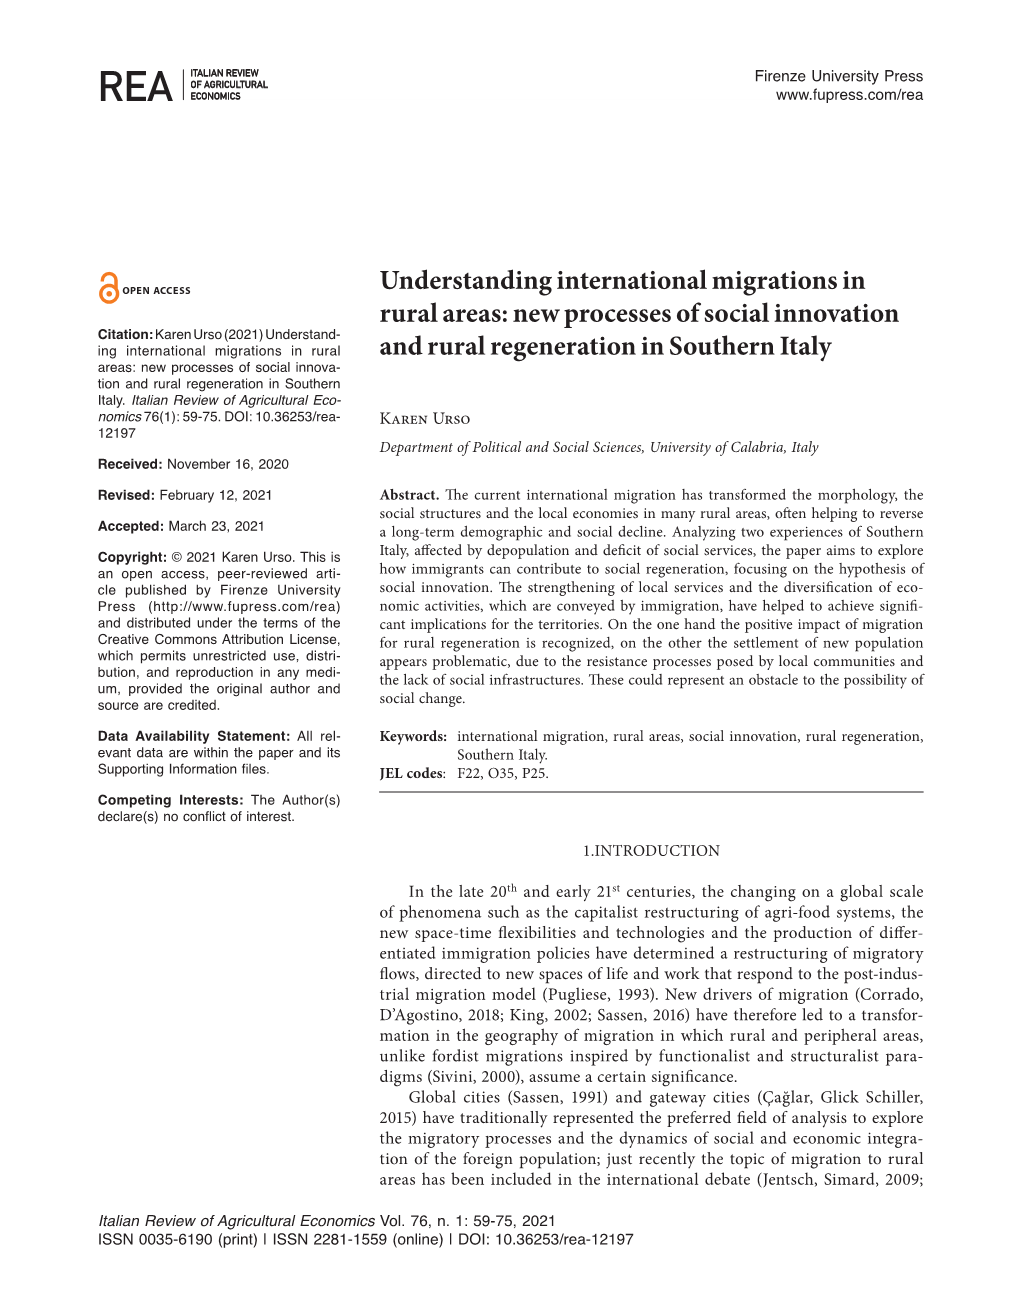 Understanding International Migrations in Rural Areas